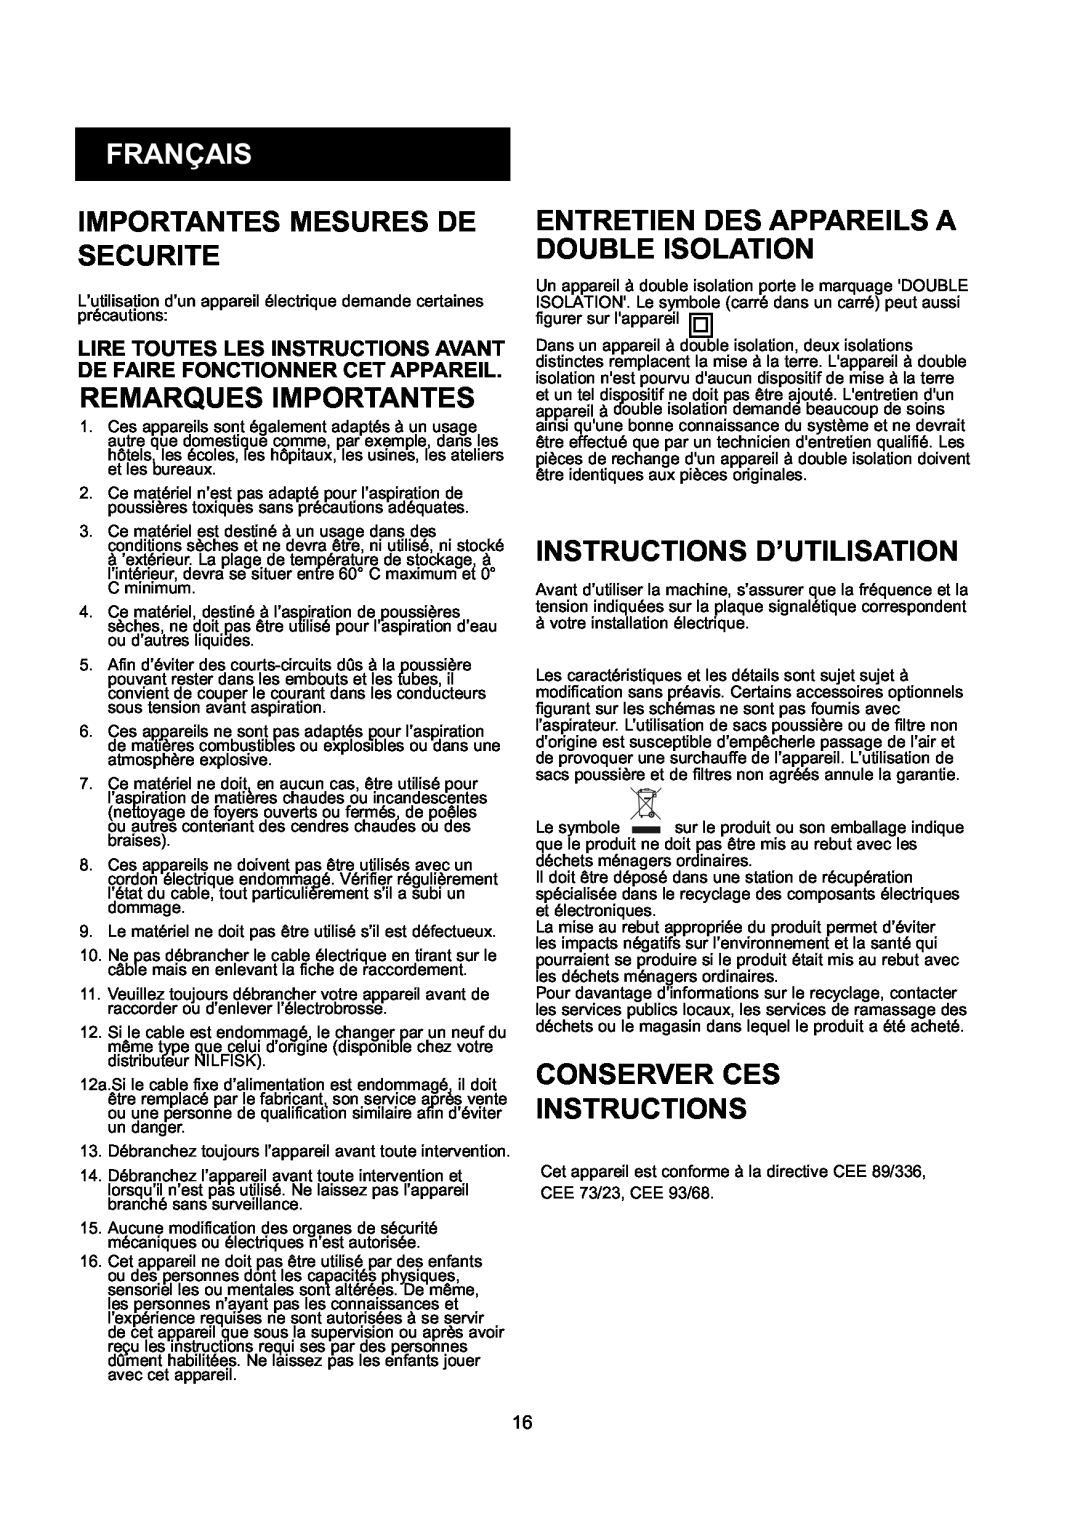 Nilfisk-ALTO GD 10 Back manual Français, Importantes Mesures De Securite, Remarques Importantes, Instructions D’Utilisation 